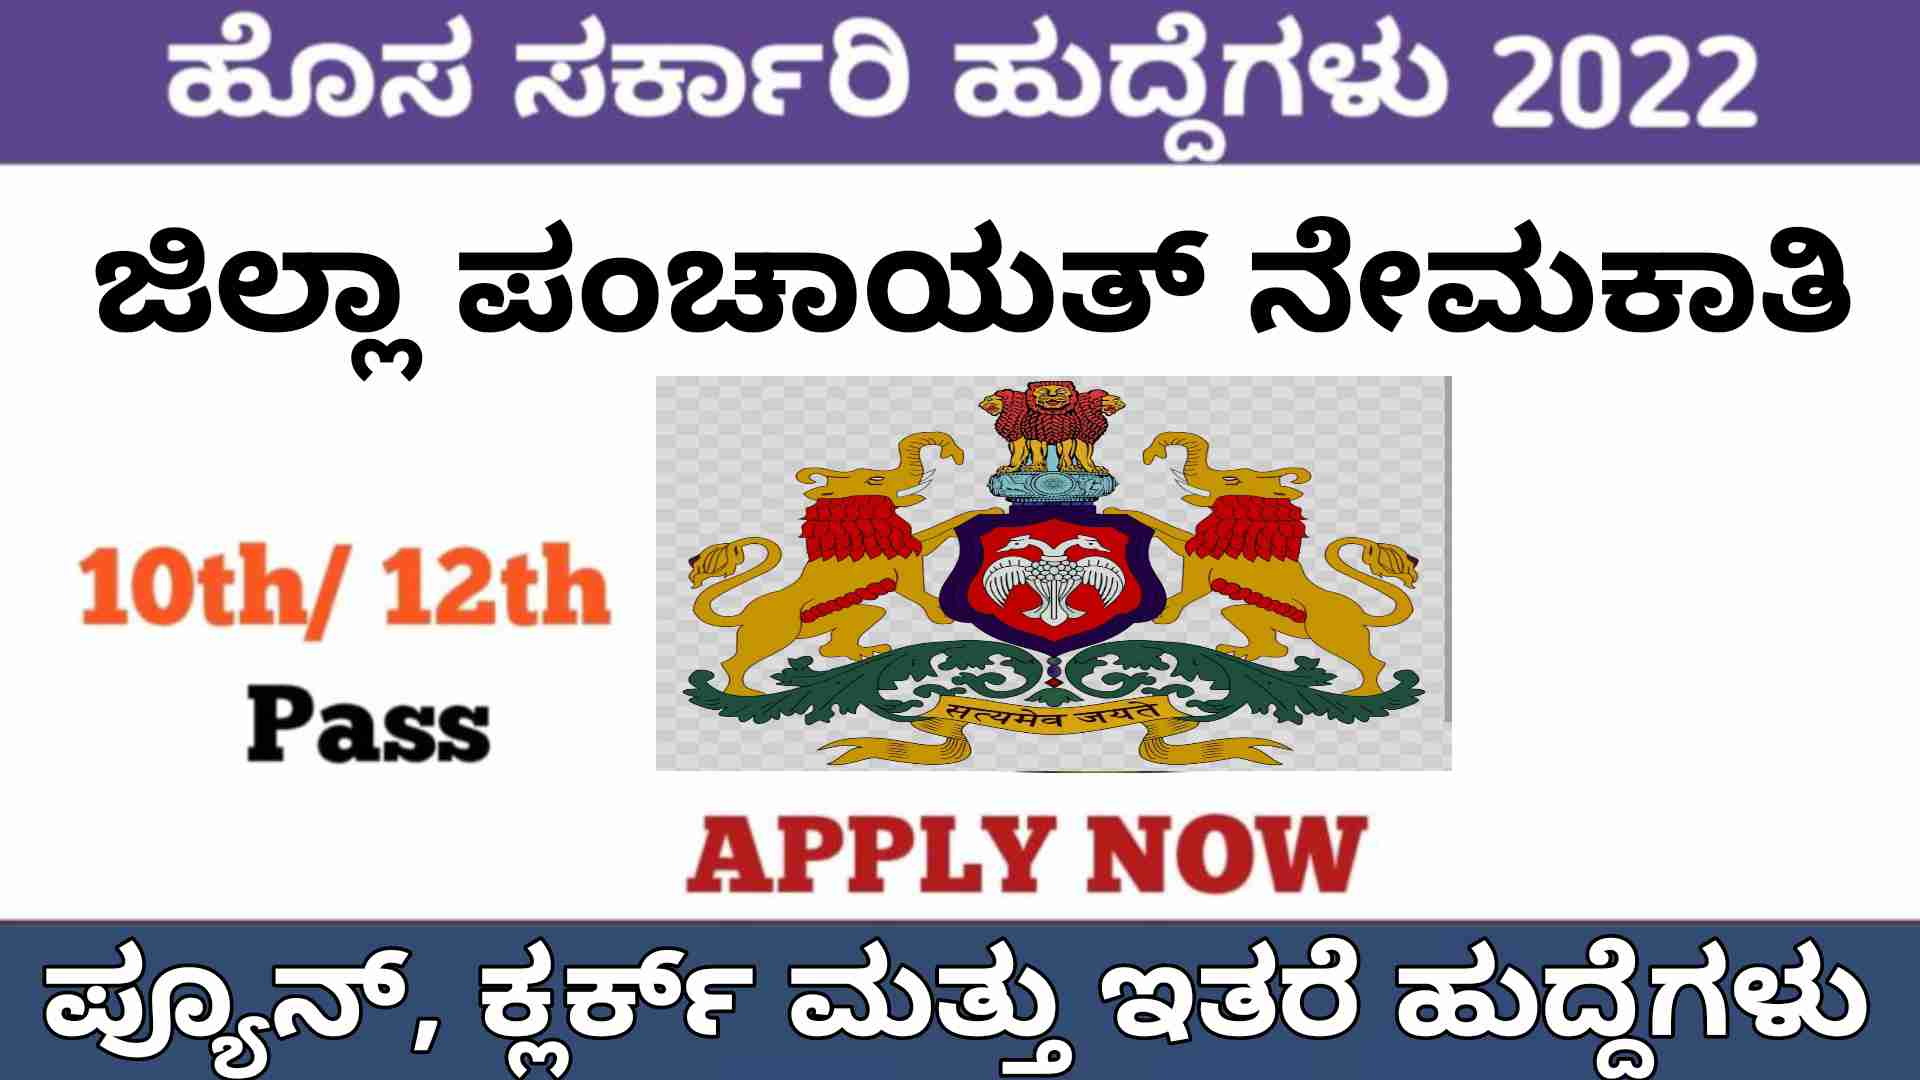 Jilla panchayat recruitment Karnataka